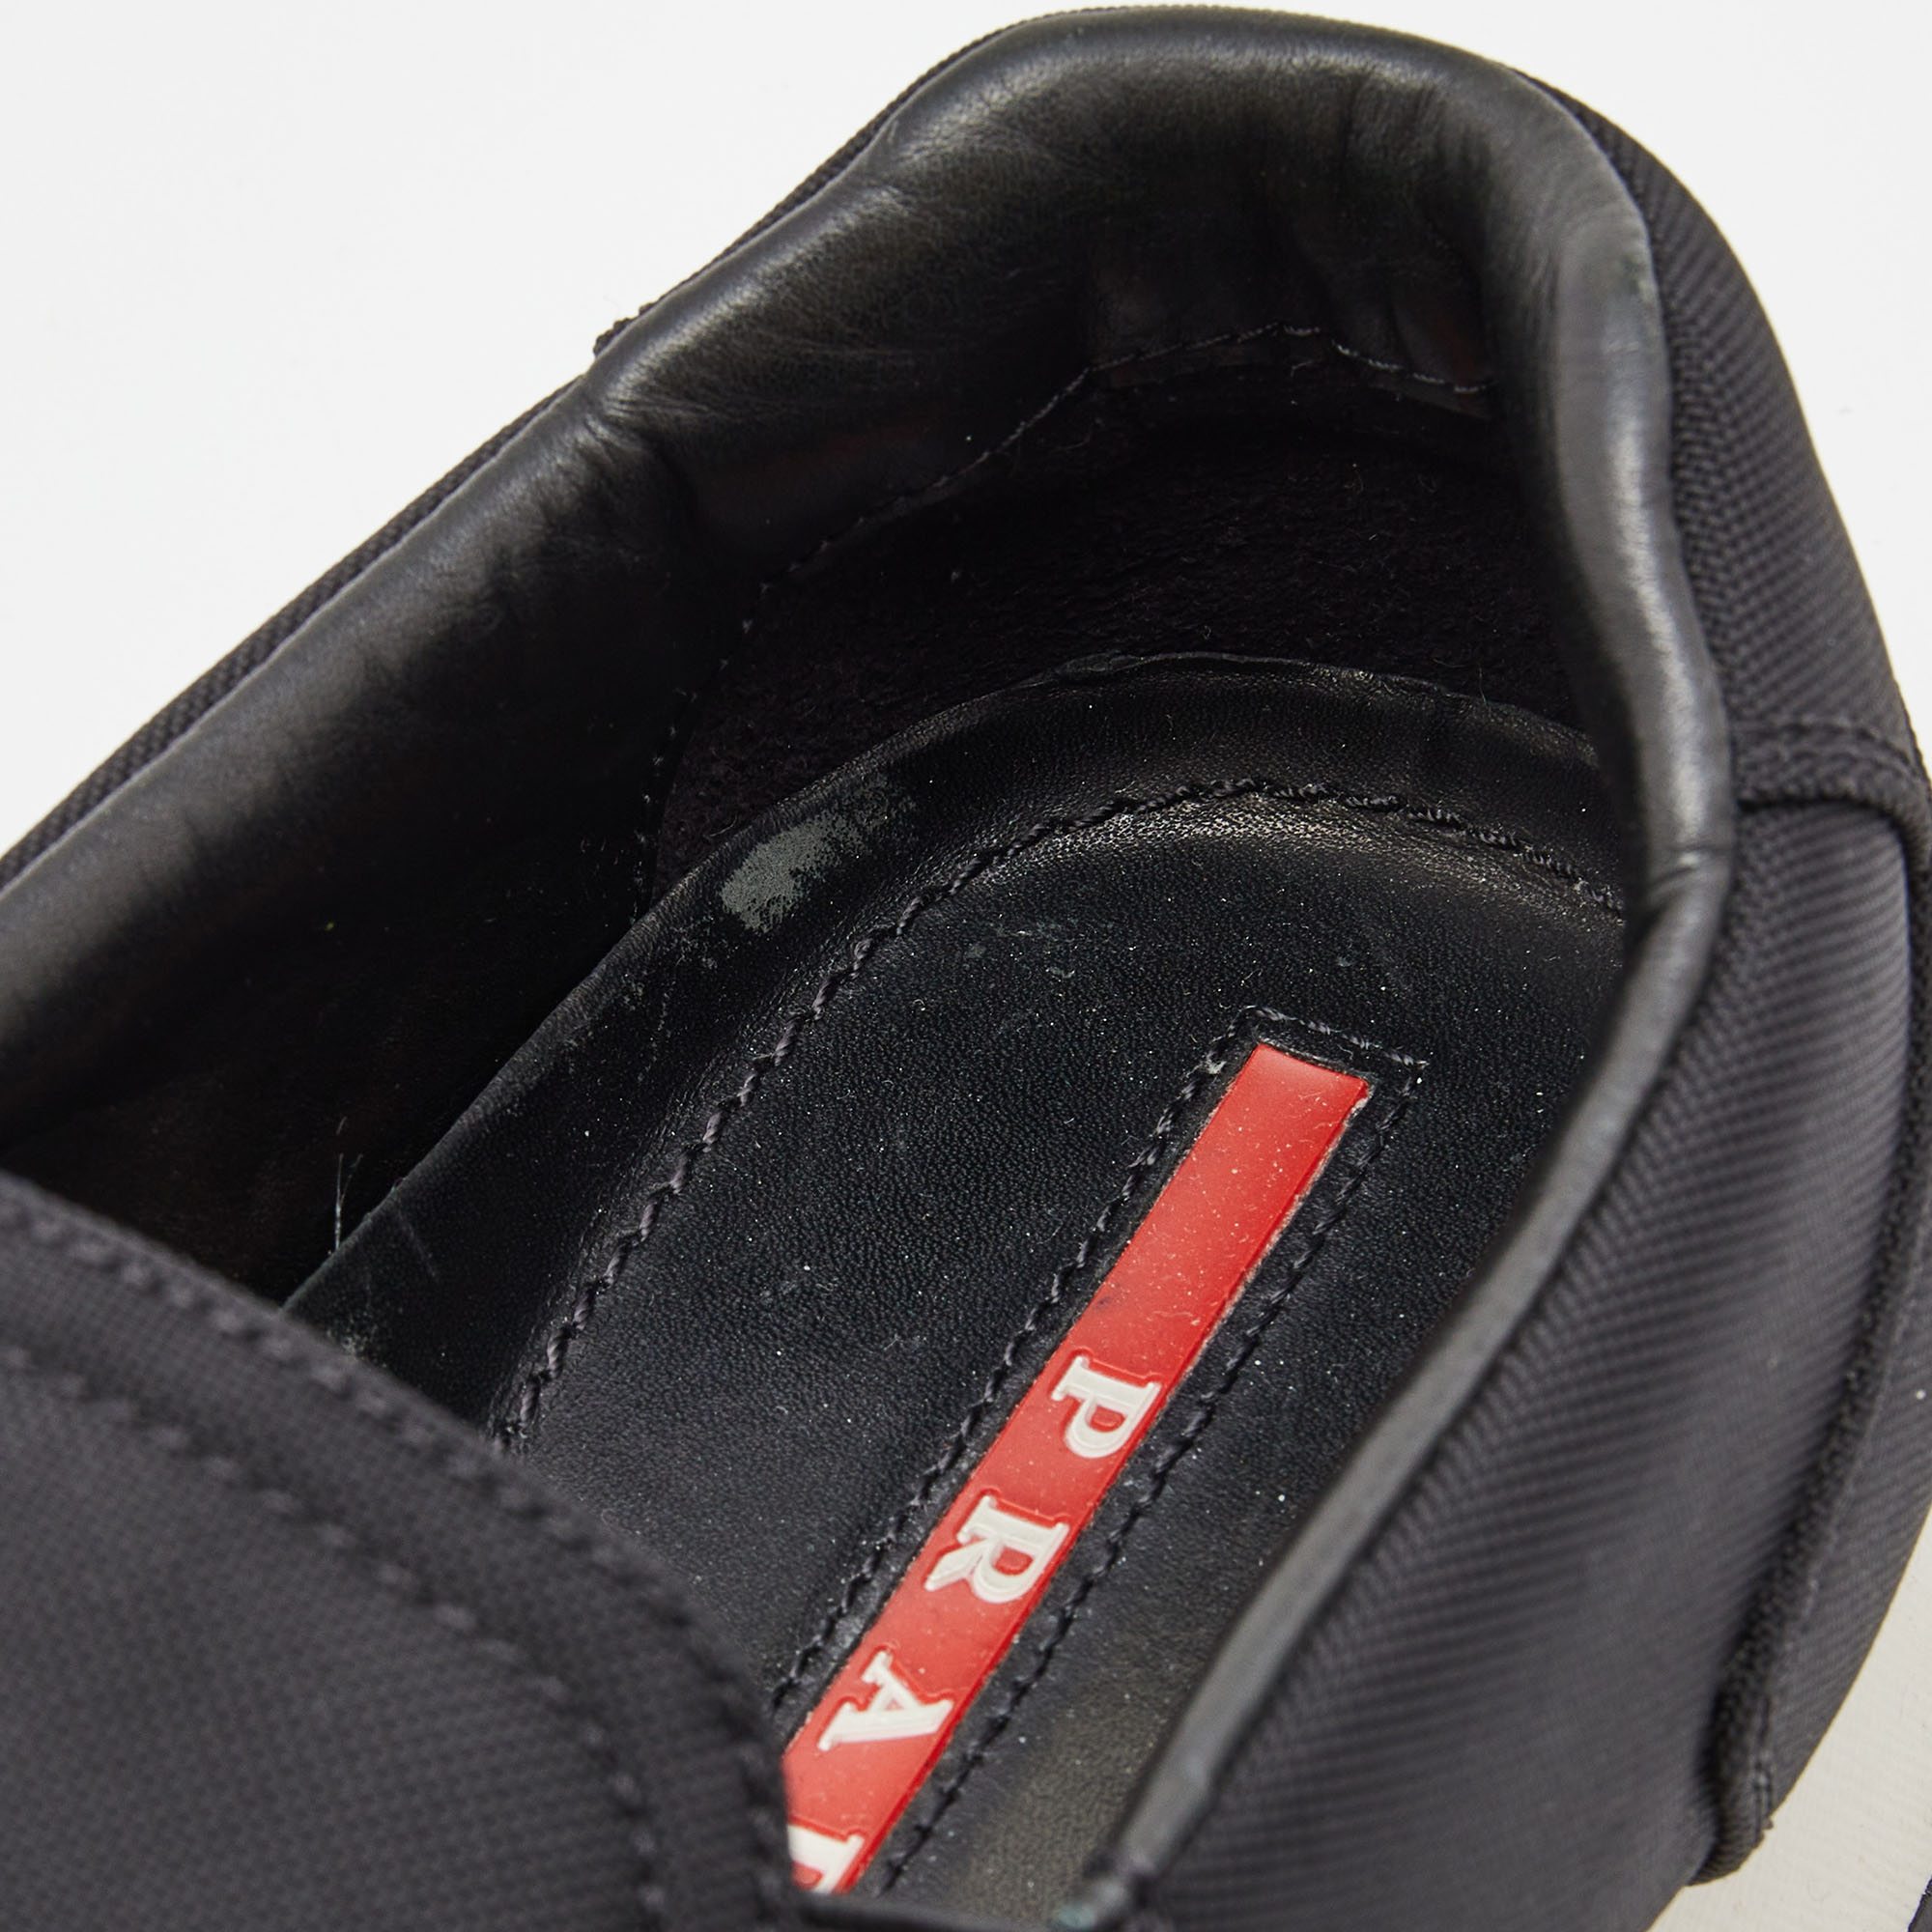 Prada Sport Black Canvas Slip On Sneakers Size 41.5